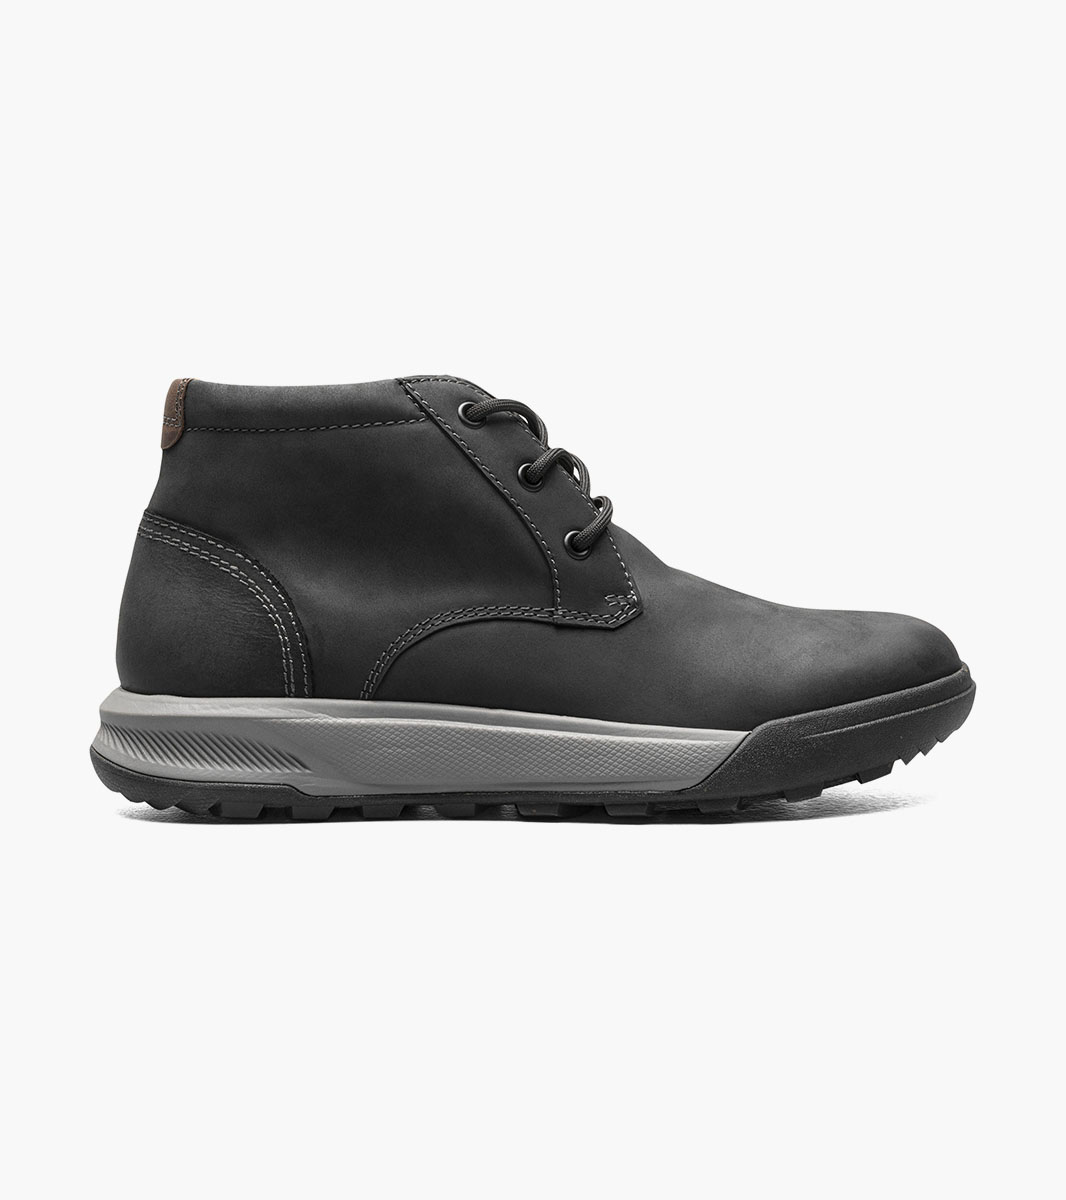 Trail Mix Plain Toe Chukka Boot Men’s Casual Shoes | Florsheim.com